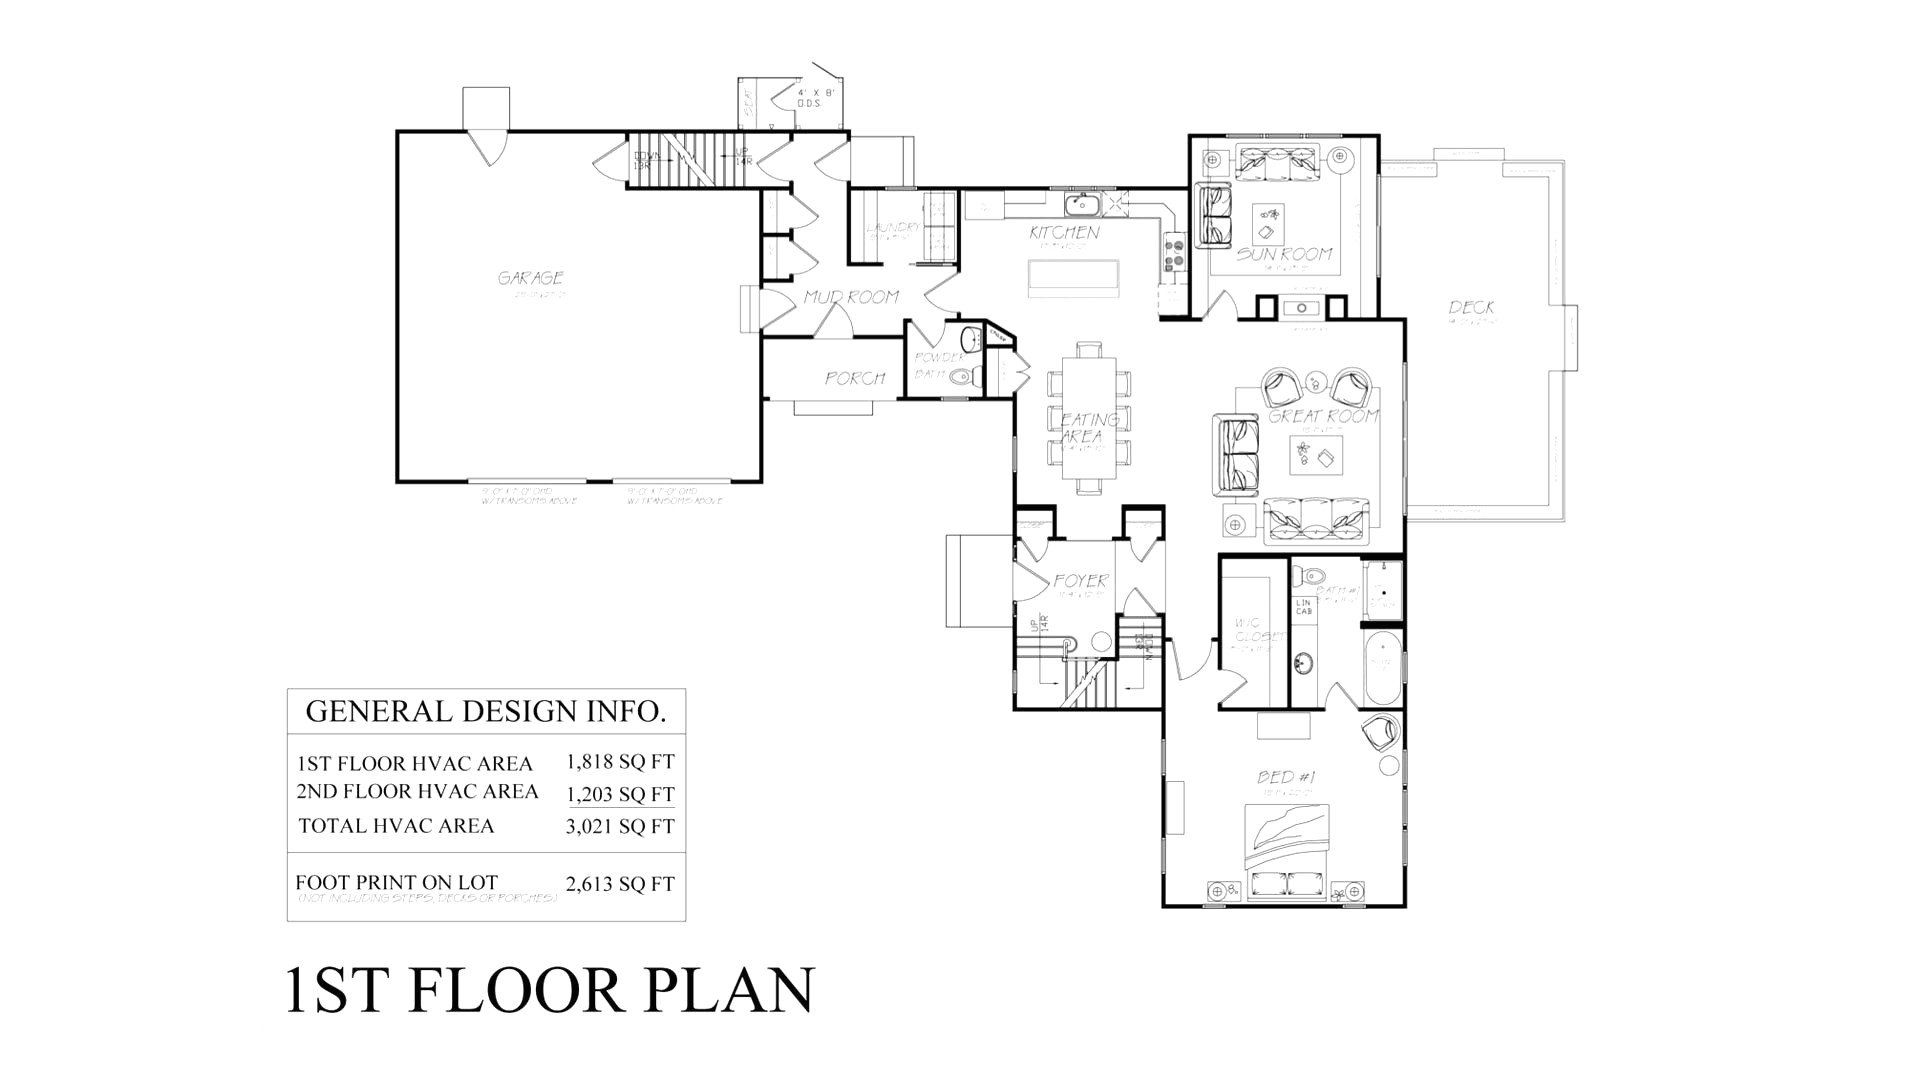 Minecraft Drawing Ideas Minecraft Houses Floor Plans Inspirational Floor Plan Unique